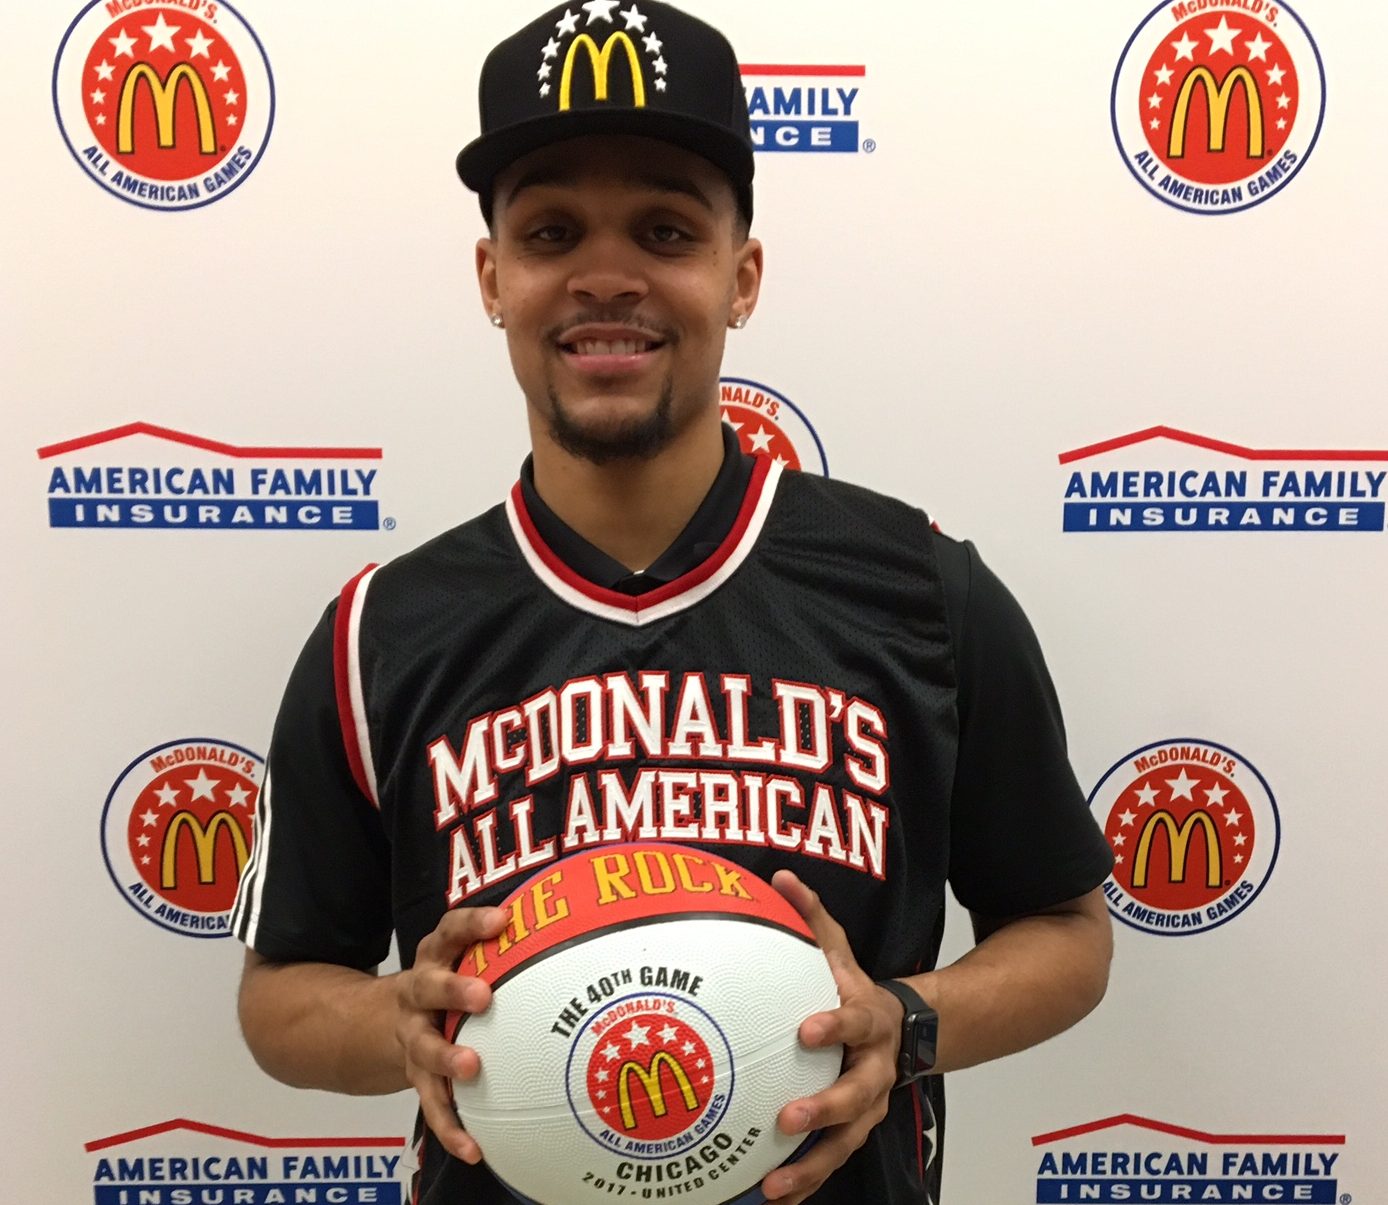 Headgear - Jordan McDonalds All American Basketball Jersey